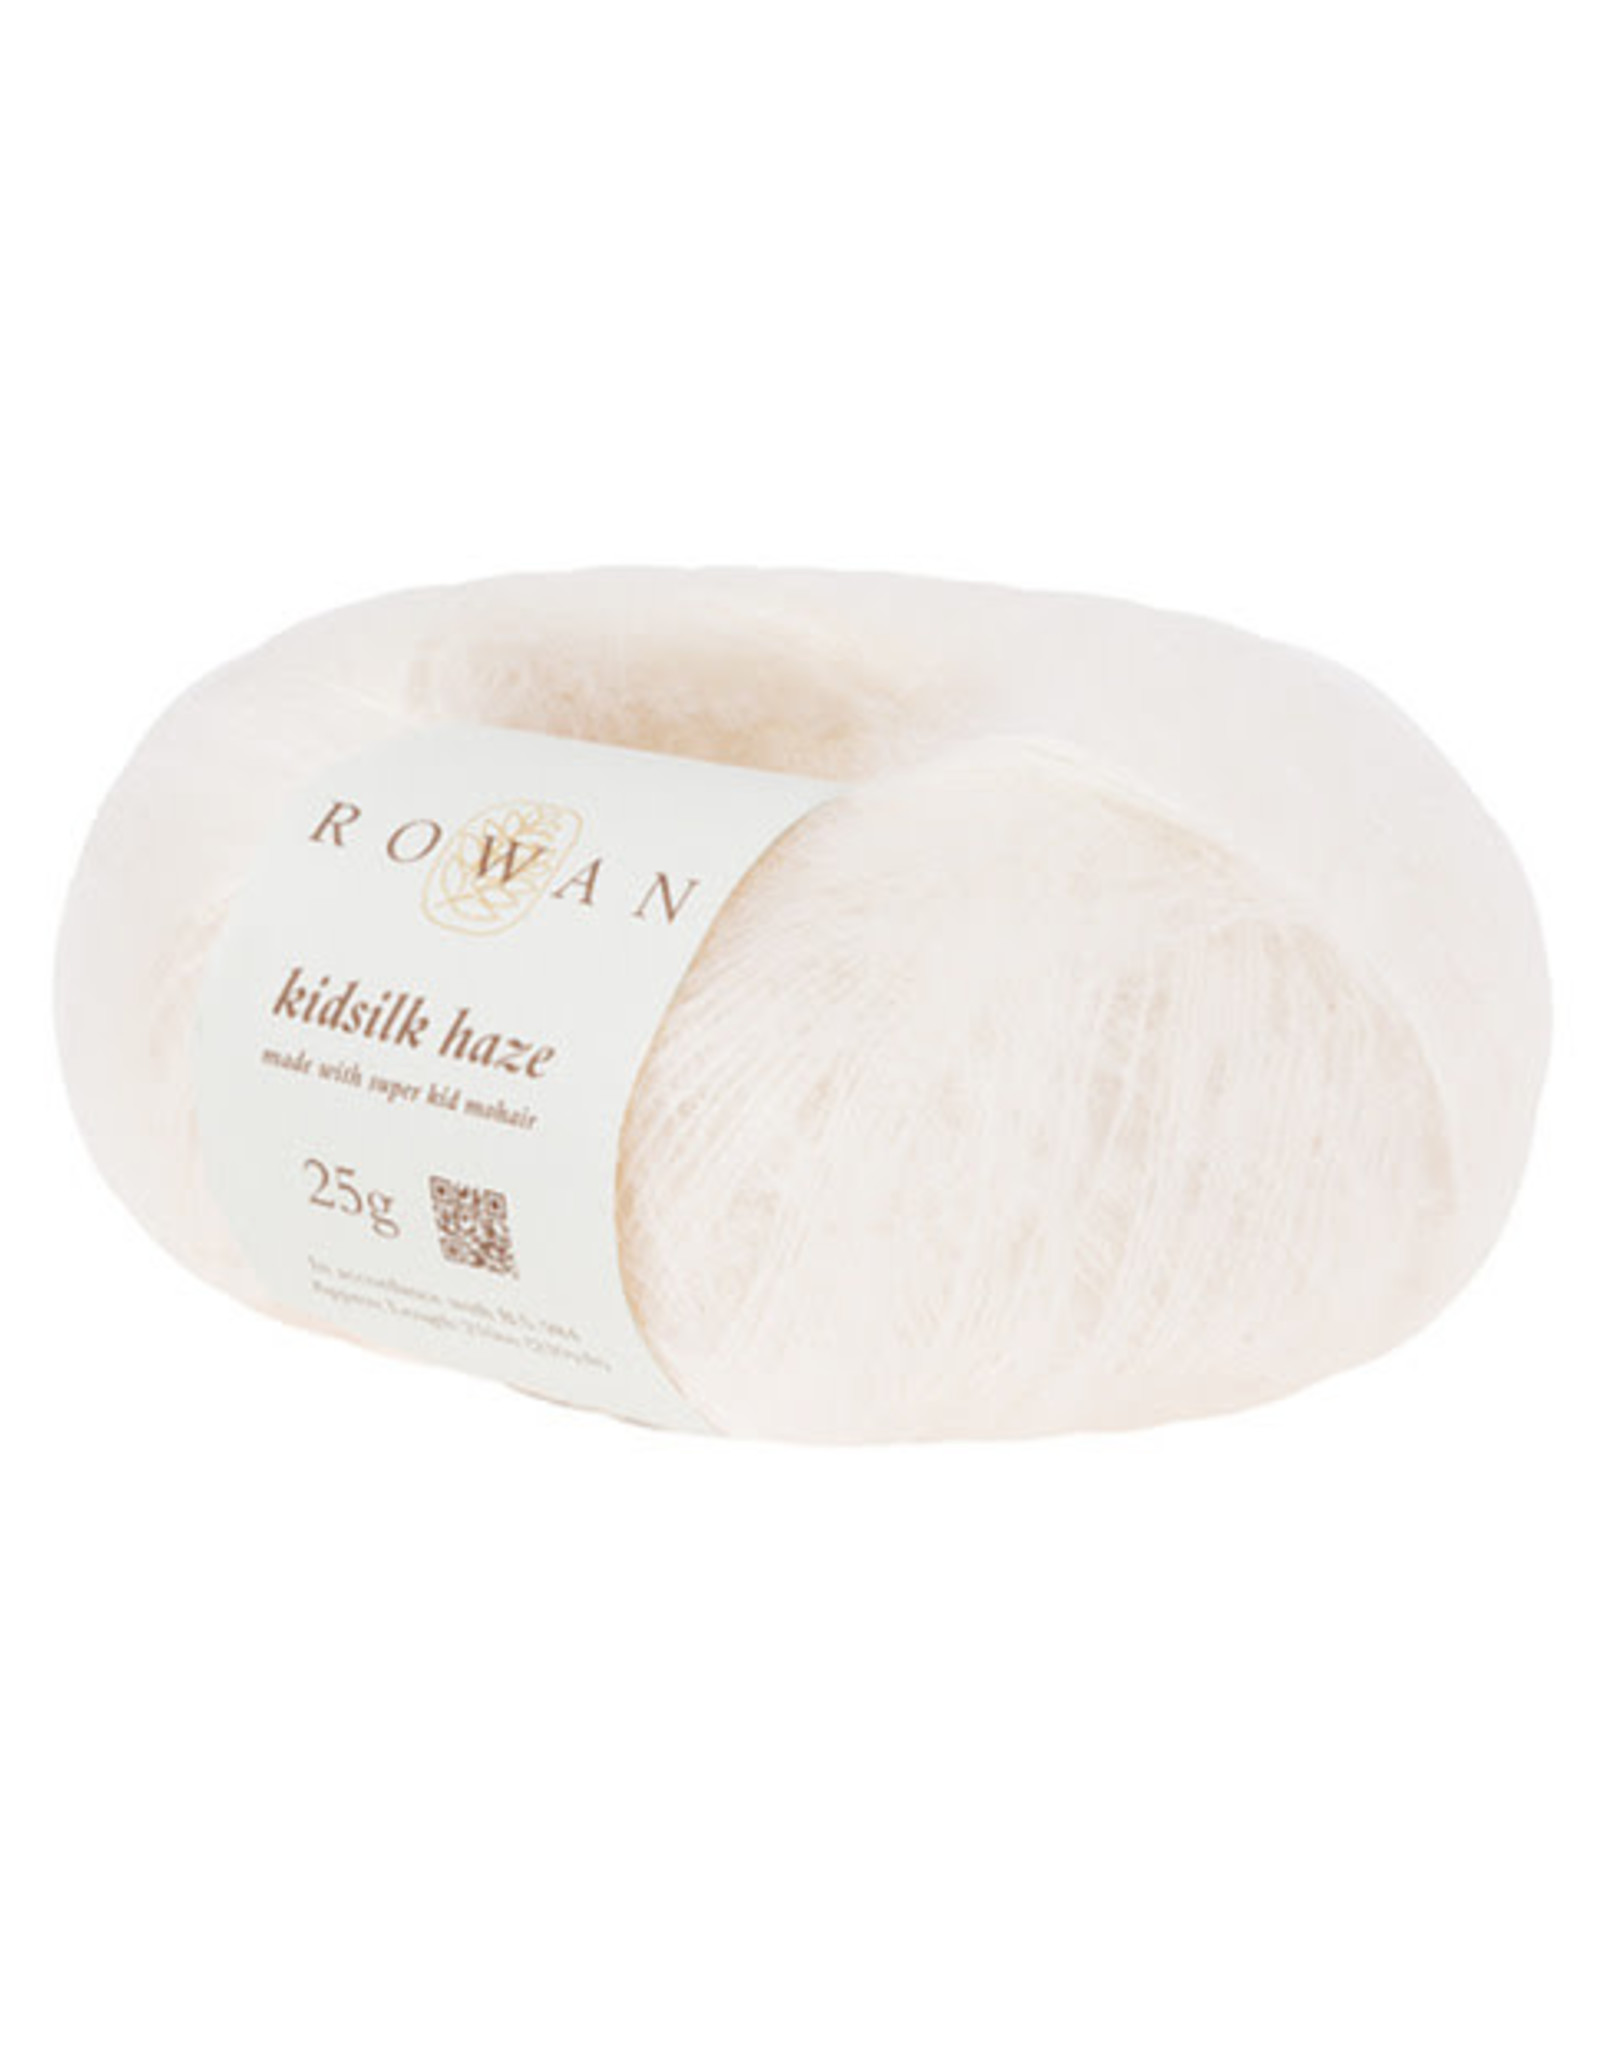 Rowan Kidsilk Haze 634 cream